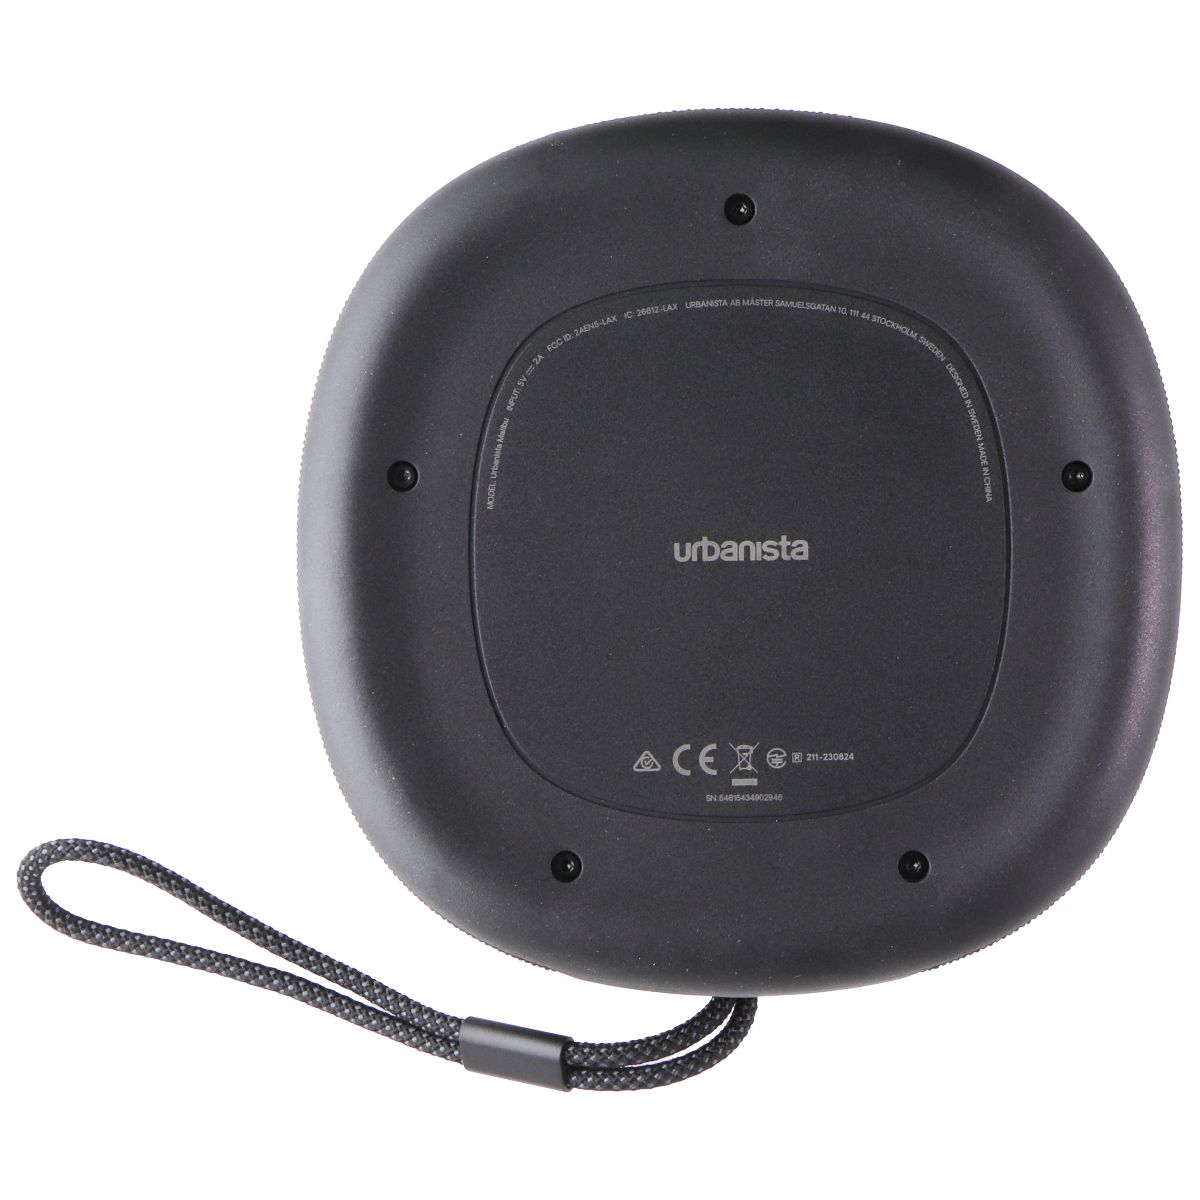 Urbanista Malibu Small Solar Charging Bluetooth Speaker (IP67) - Midnight Black iPod, Audio Player Accessories - Audio Docks & Mini Speakers Urbanista    - Simple Cell Bulk Wholesale Pricing - USA Seller